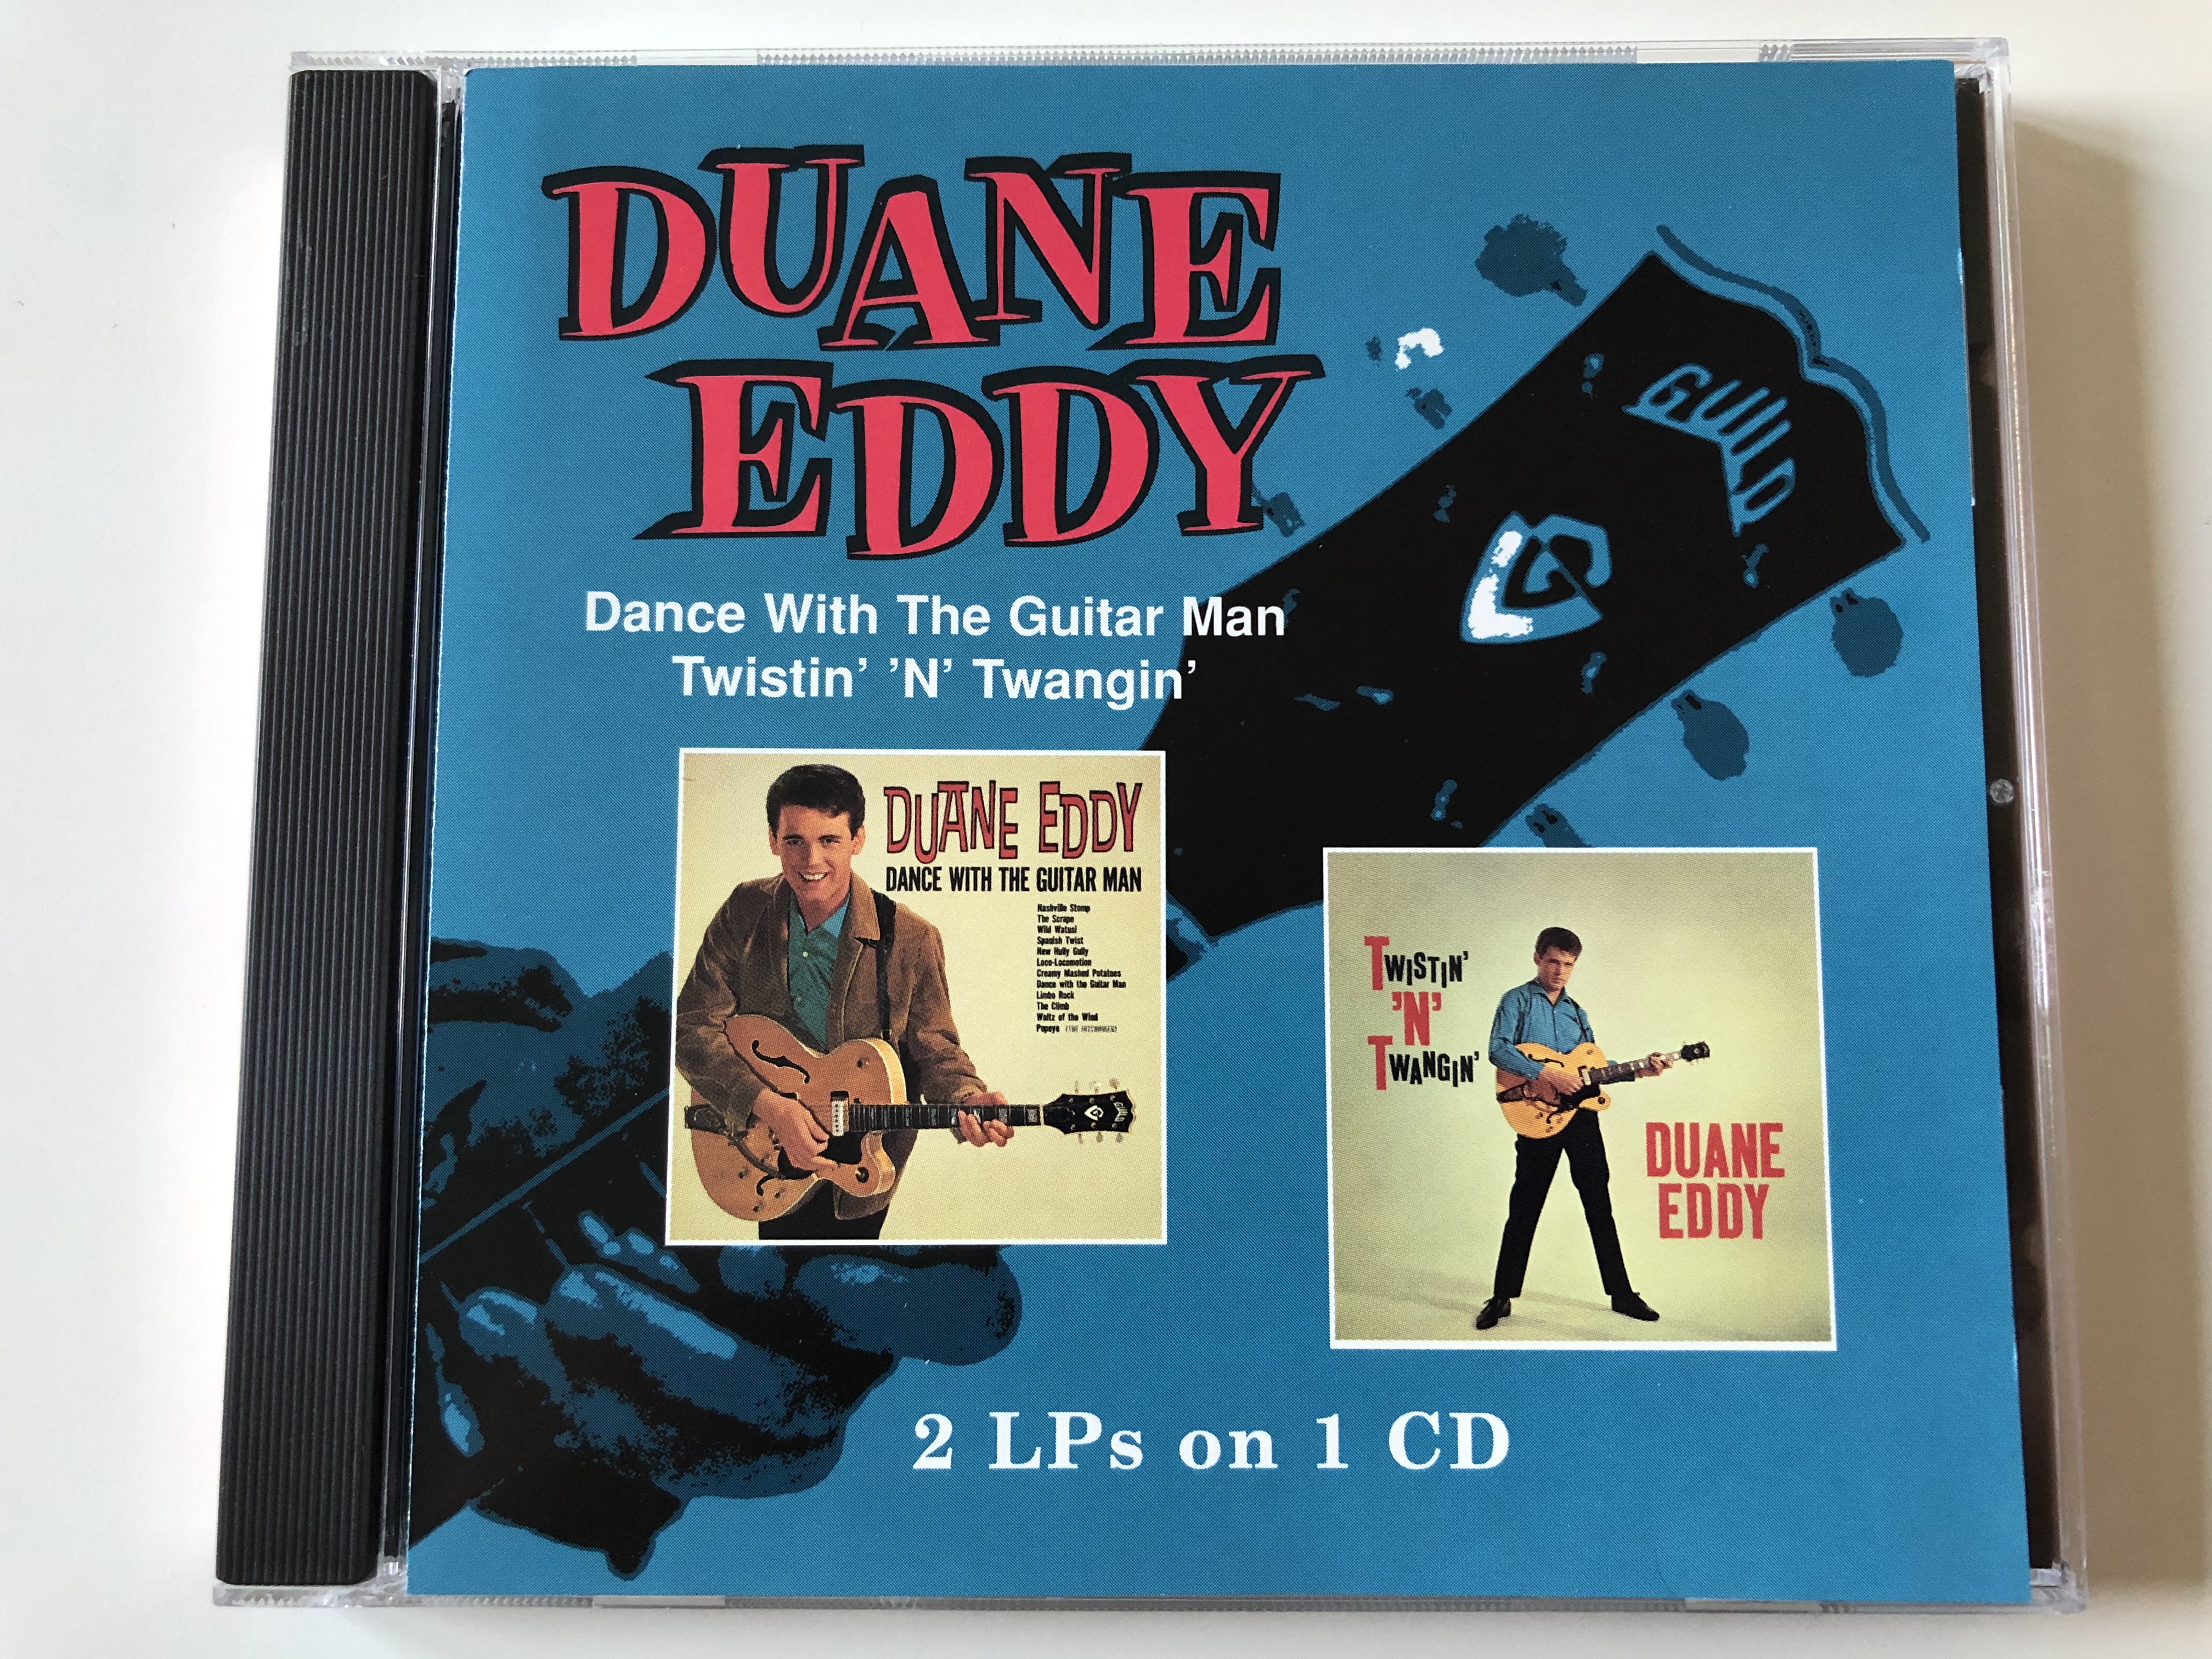 duane-eddy-dance-with-the-guitar-man-twistin-n-twangin-2-lps-on-1-cd-one-way-records-audio-cd-1998-ow-34542-1-.jpg